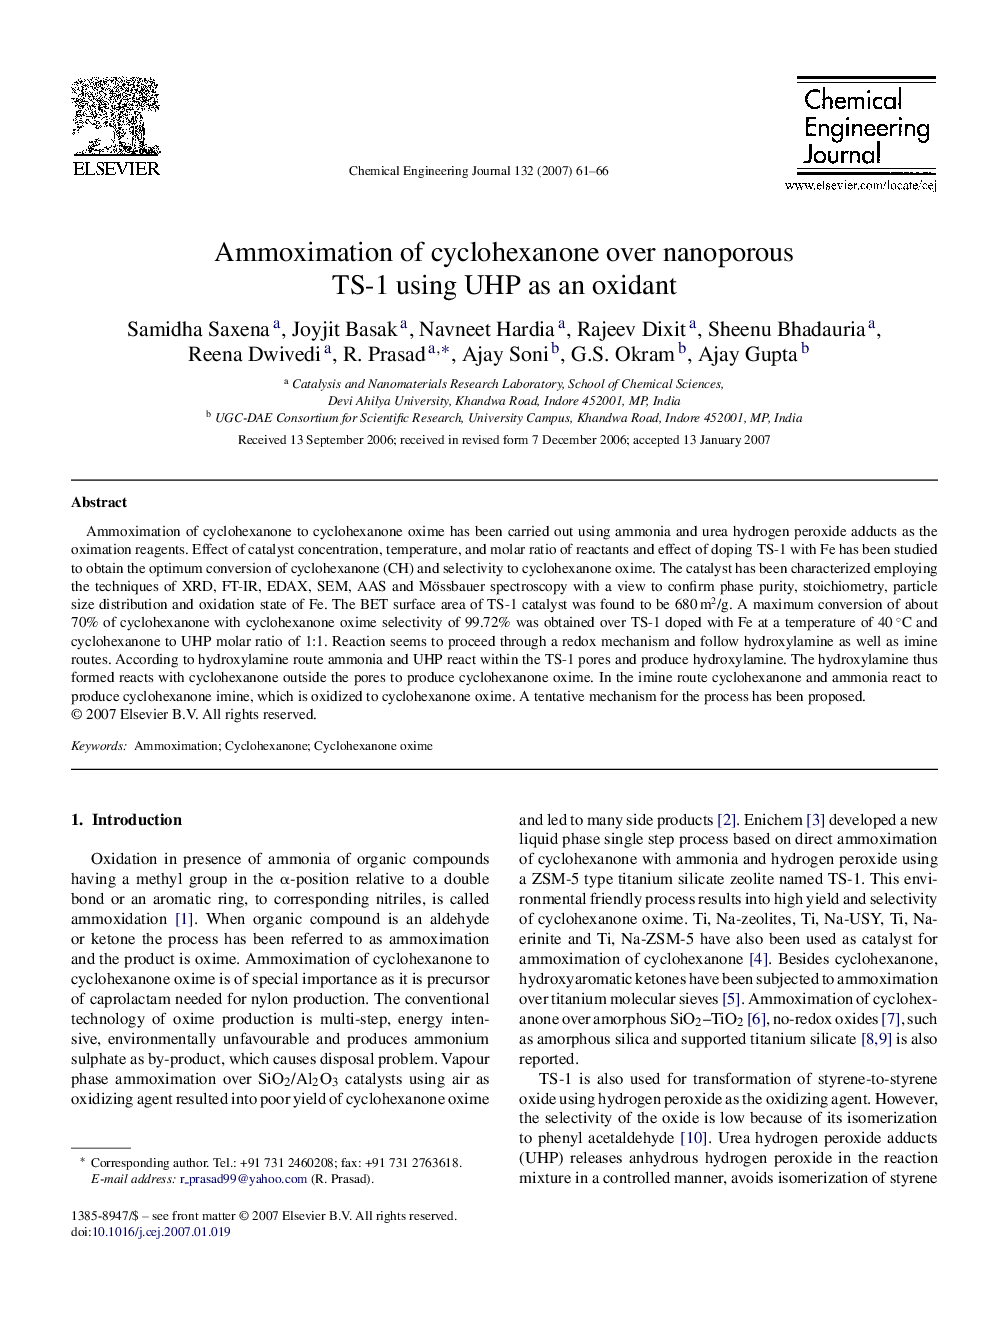 Ammoximation of cyclohexanone over nanoporous TS-1 using UHP as an oxidant